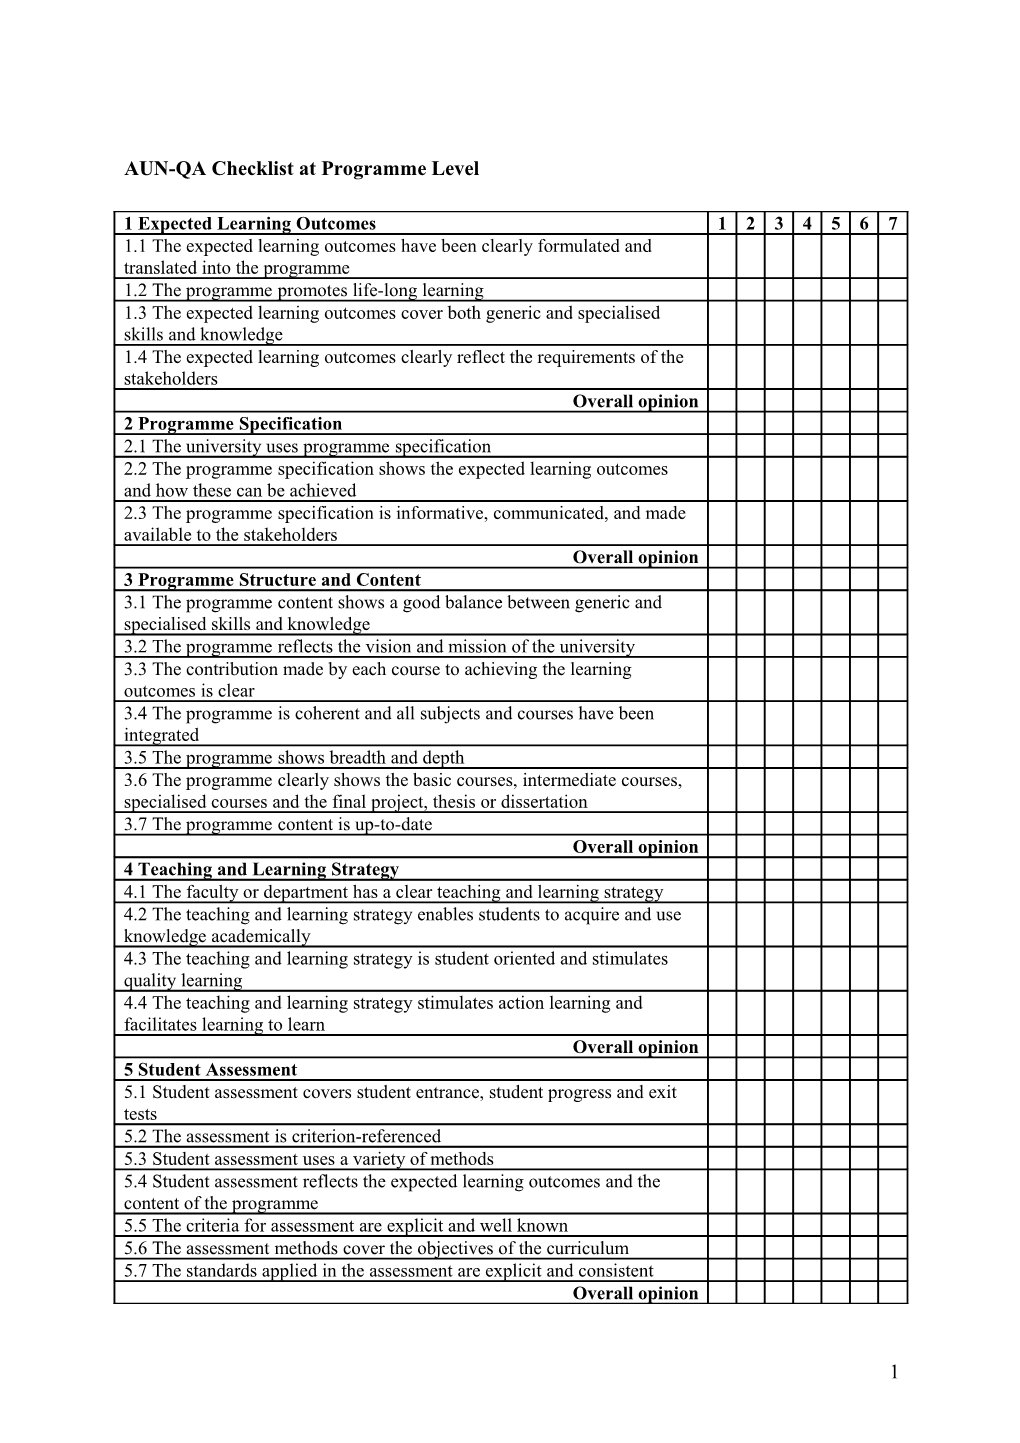 AUN-QA Checklist at Programme Level